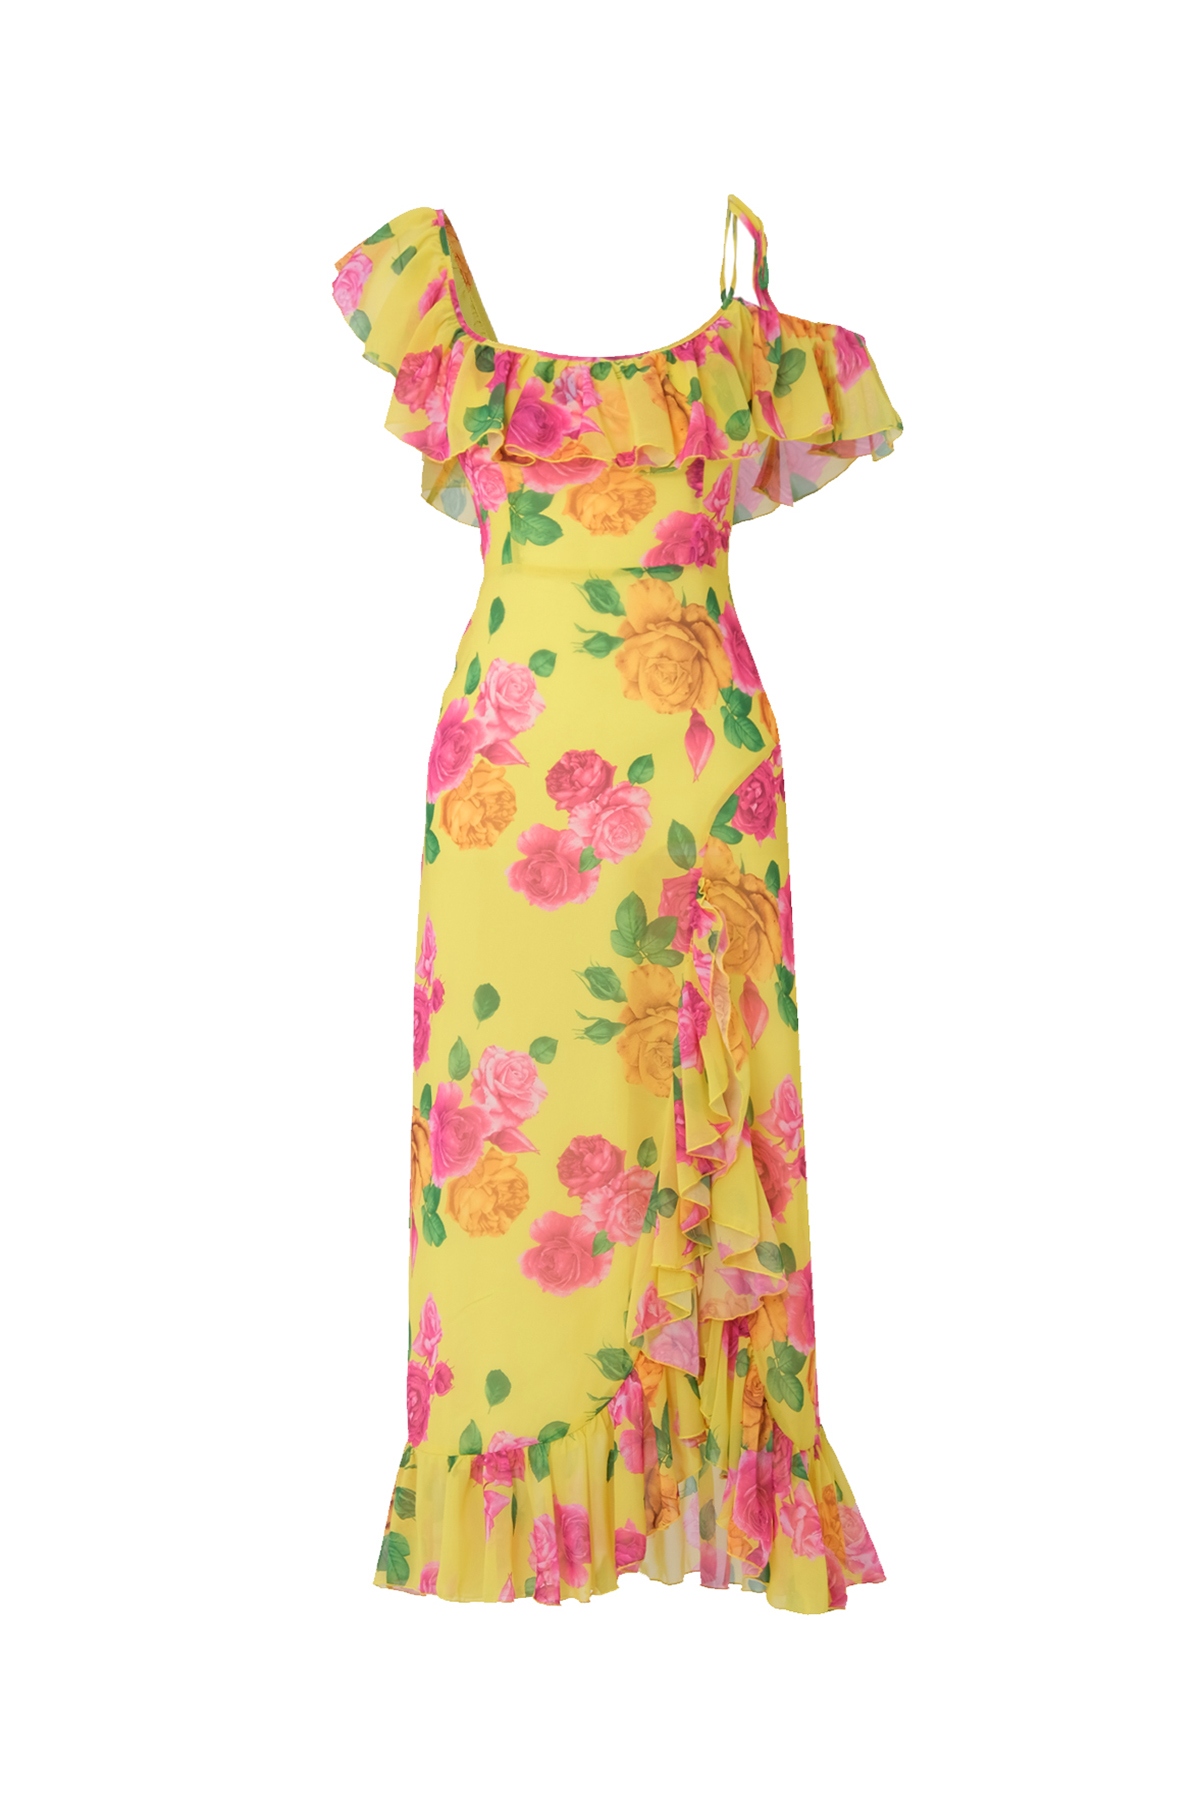 CARMINE Floral Print Yellow Chiffon Midi Dress